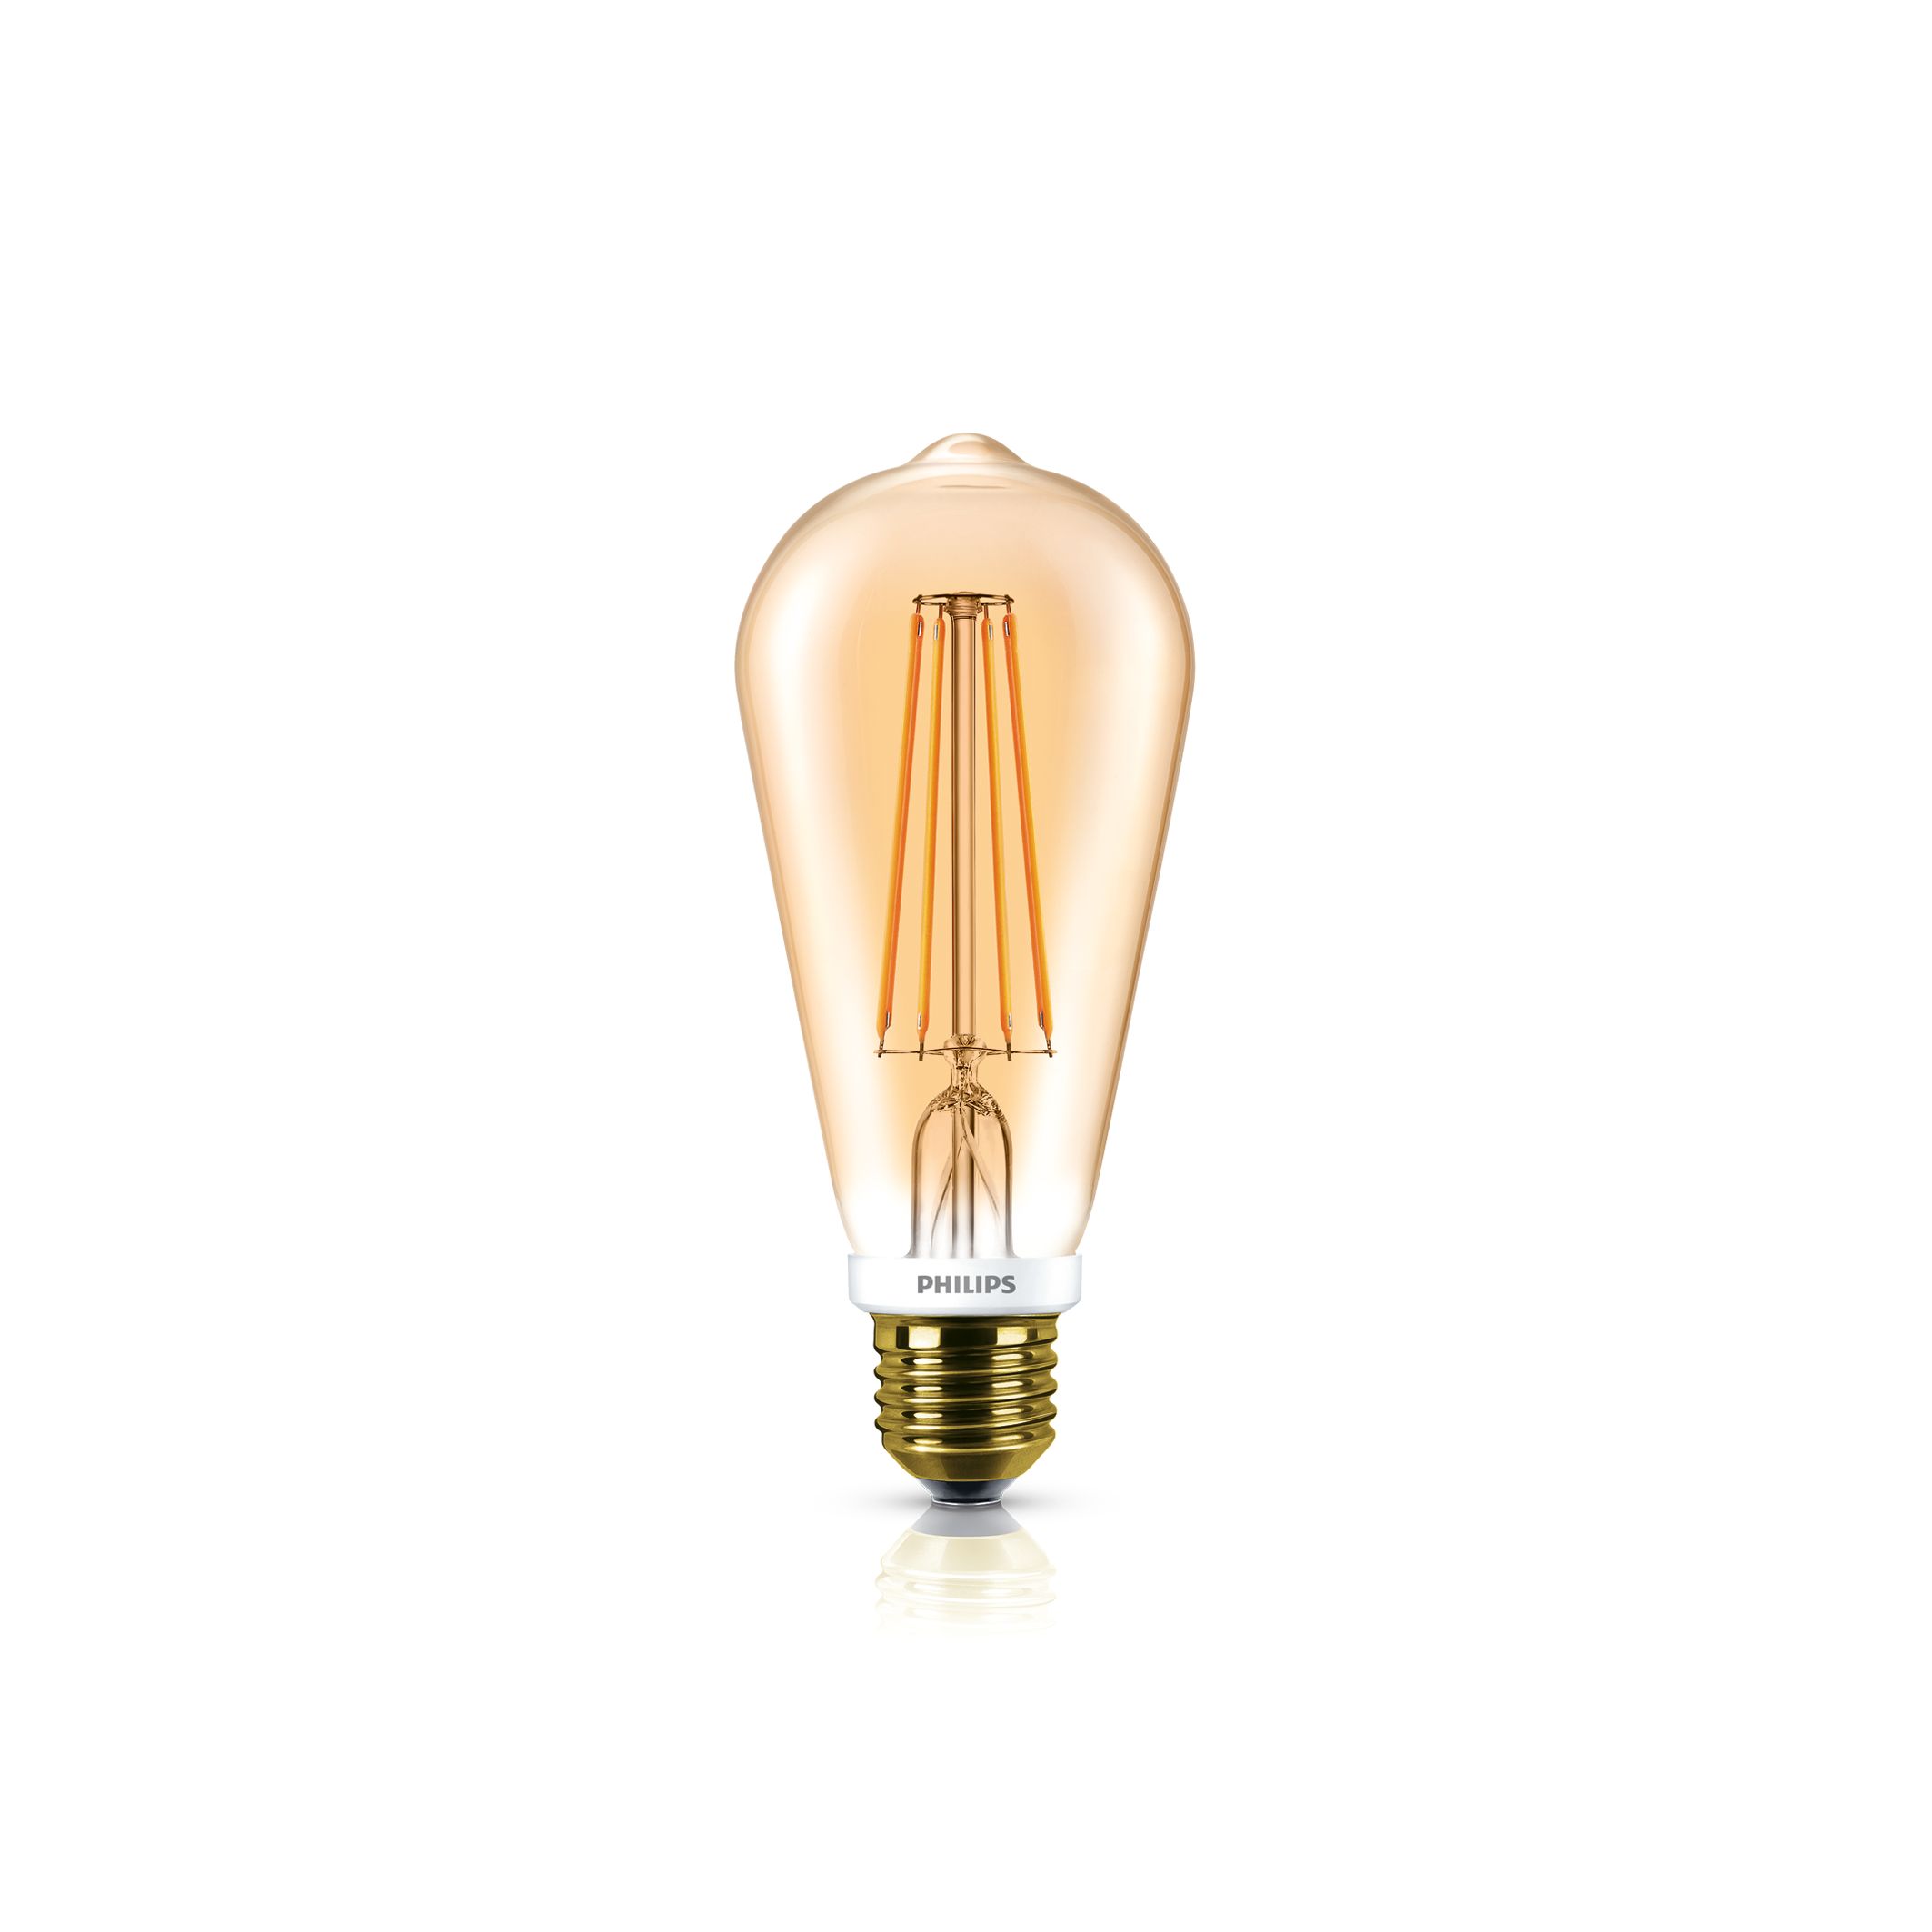 Stapel Extremisten In de naam Premium LED bulbs Vintage Filament | 6981535 | Philips lighting